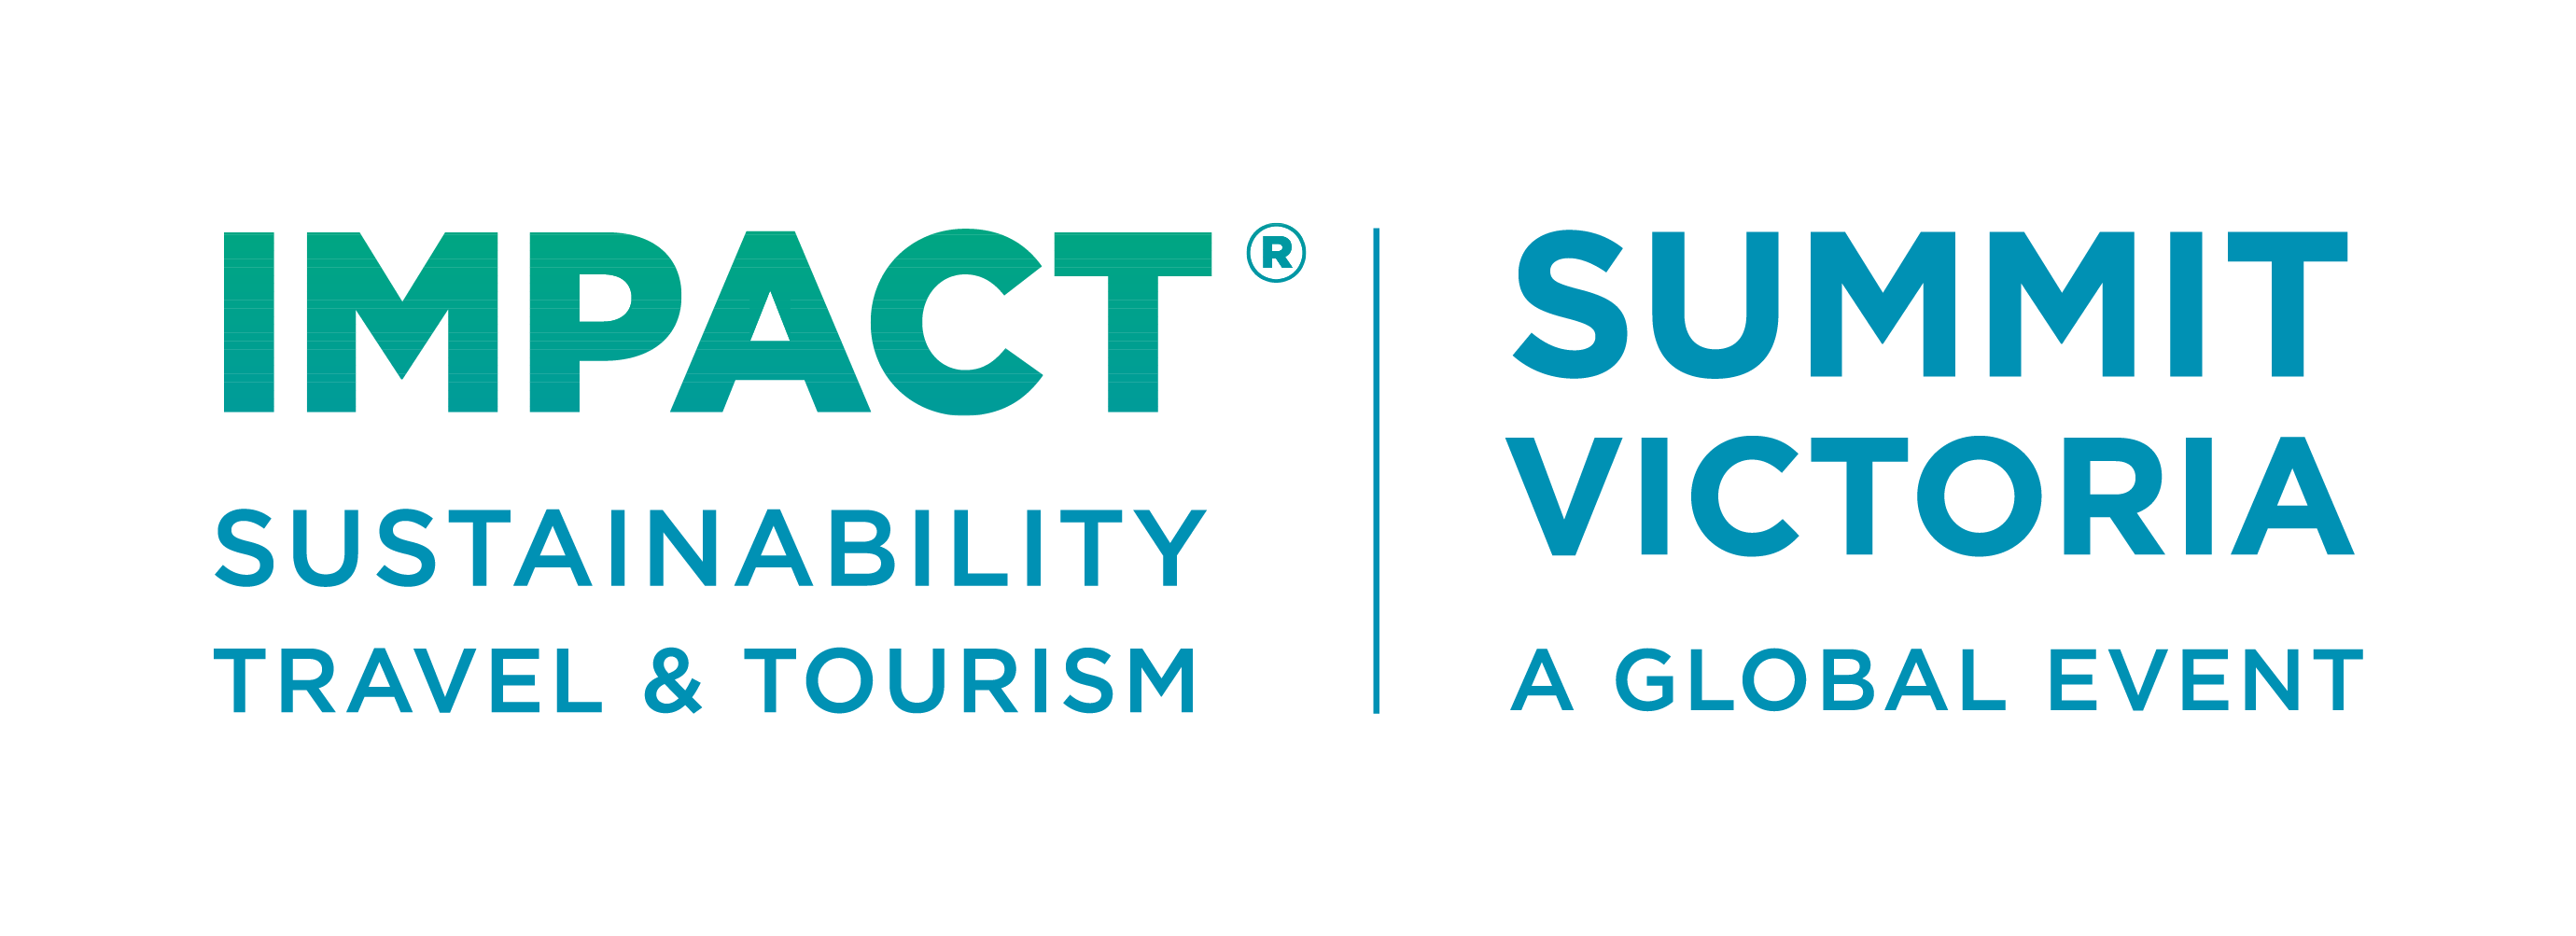 Tourism Victoria Logo